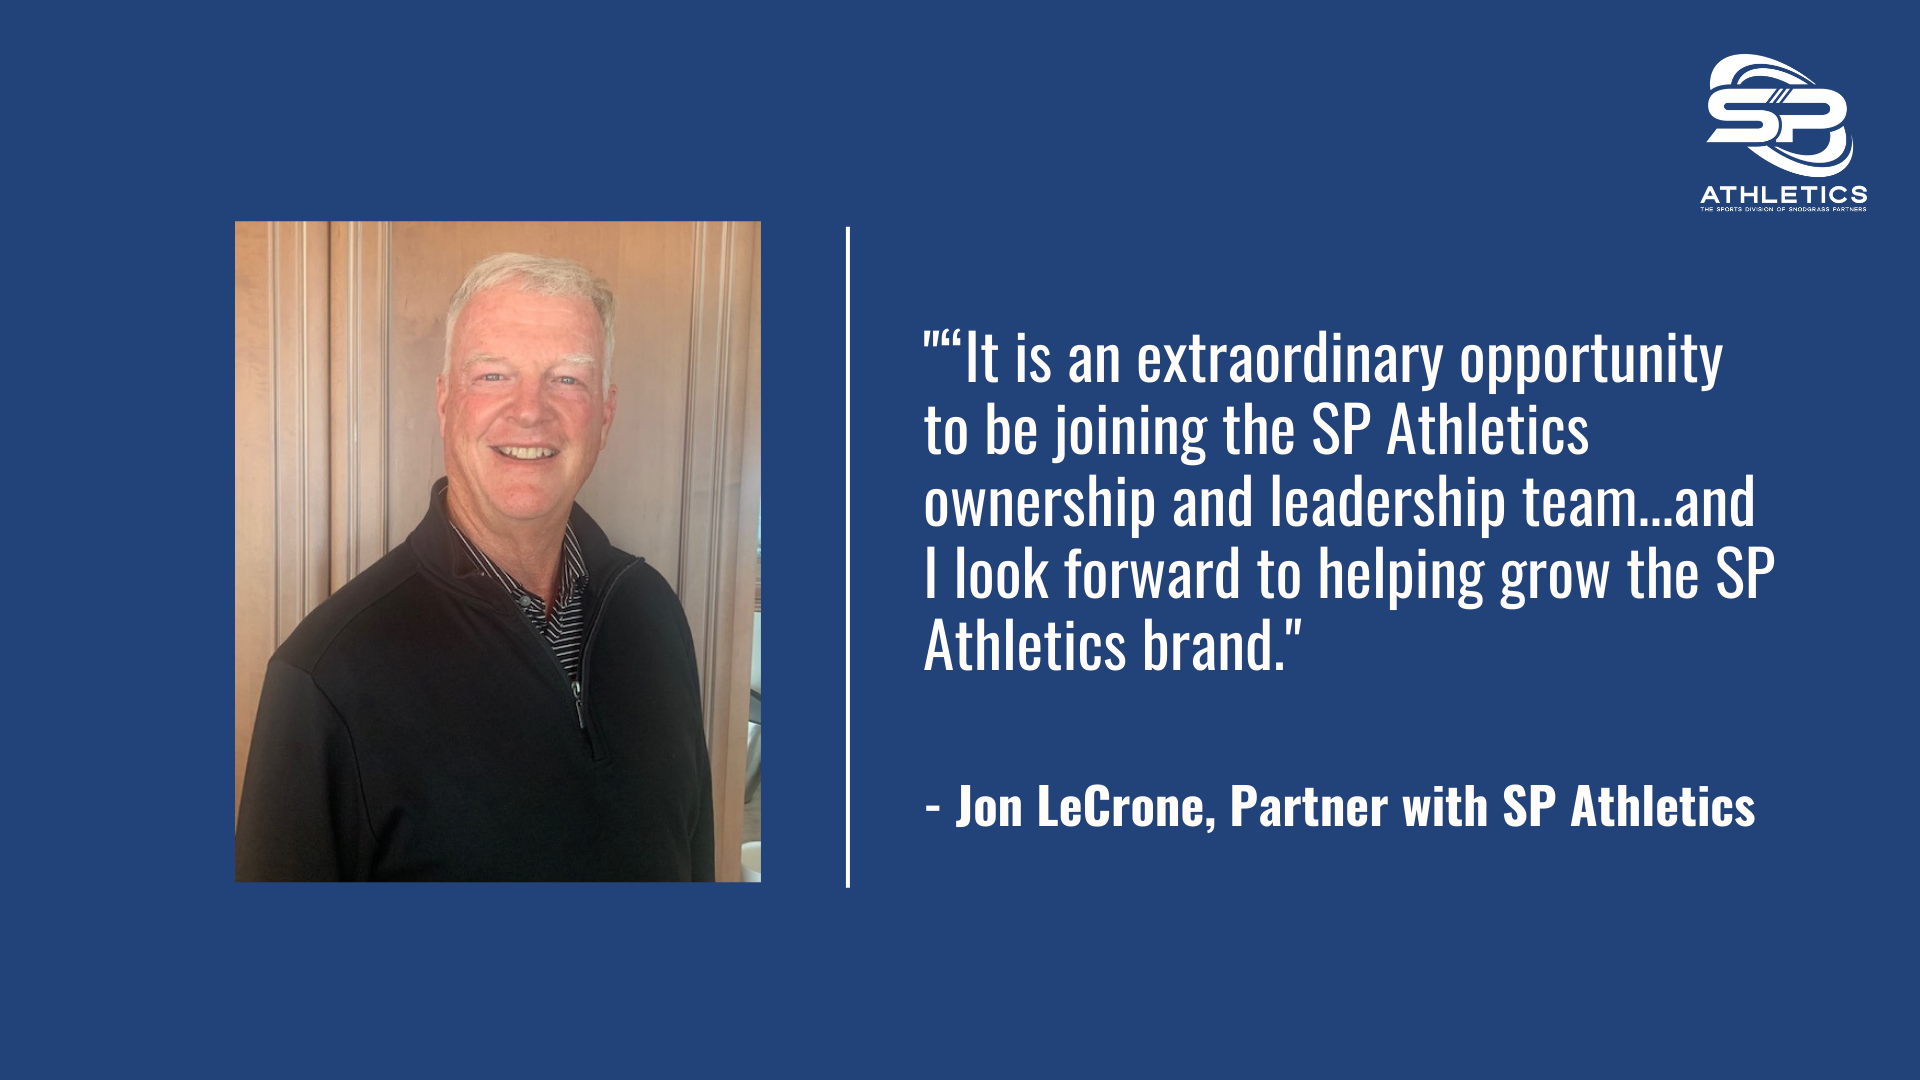 NEWS: Jon LeCrone Joins SP Athletics as a Partner